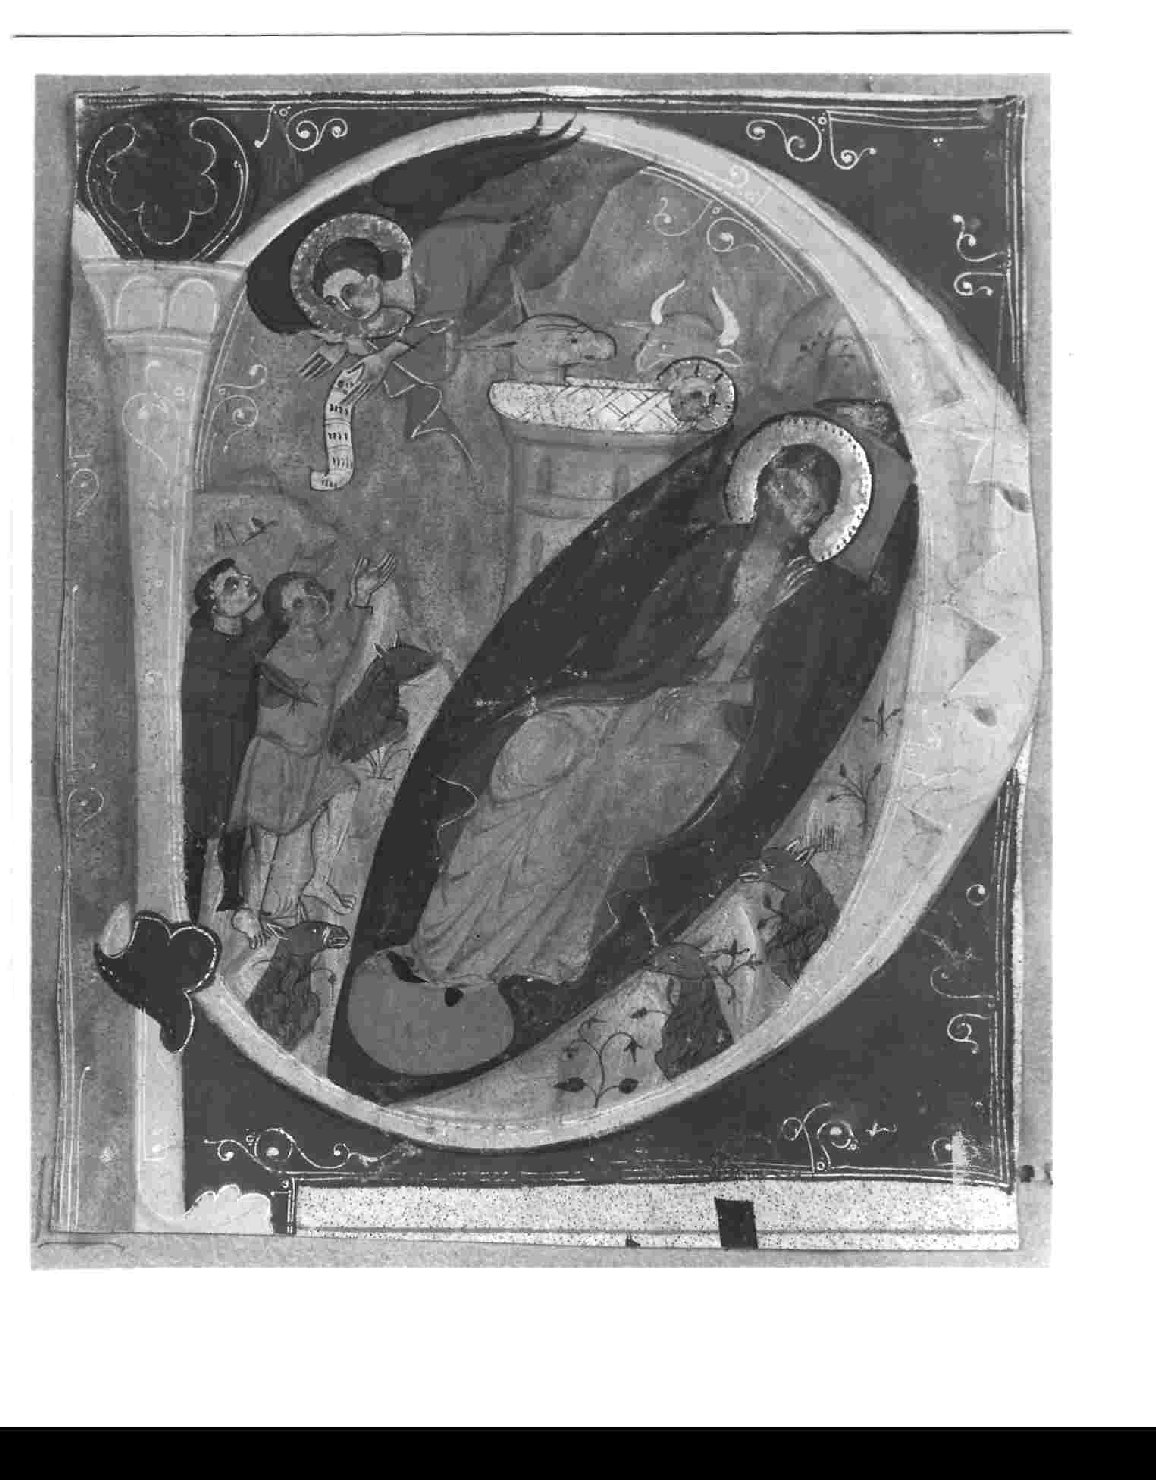 natività di Gesù (miniatura, elemento d'insieme) - bottega Italia centrale (seconda metà sec. XIII)